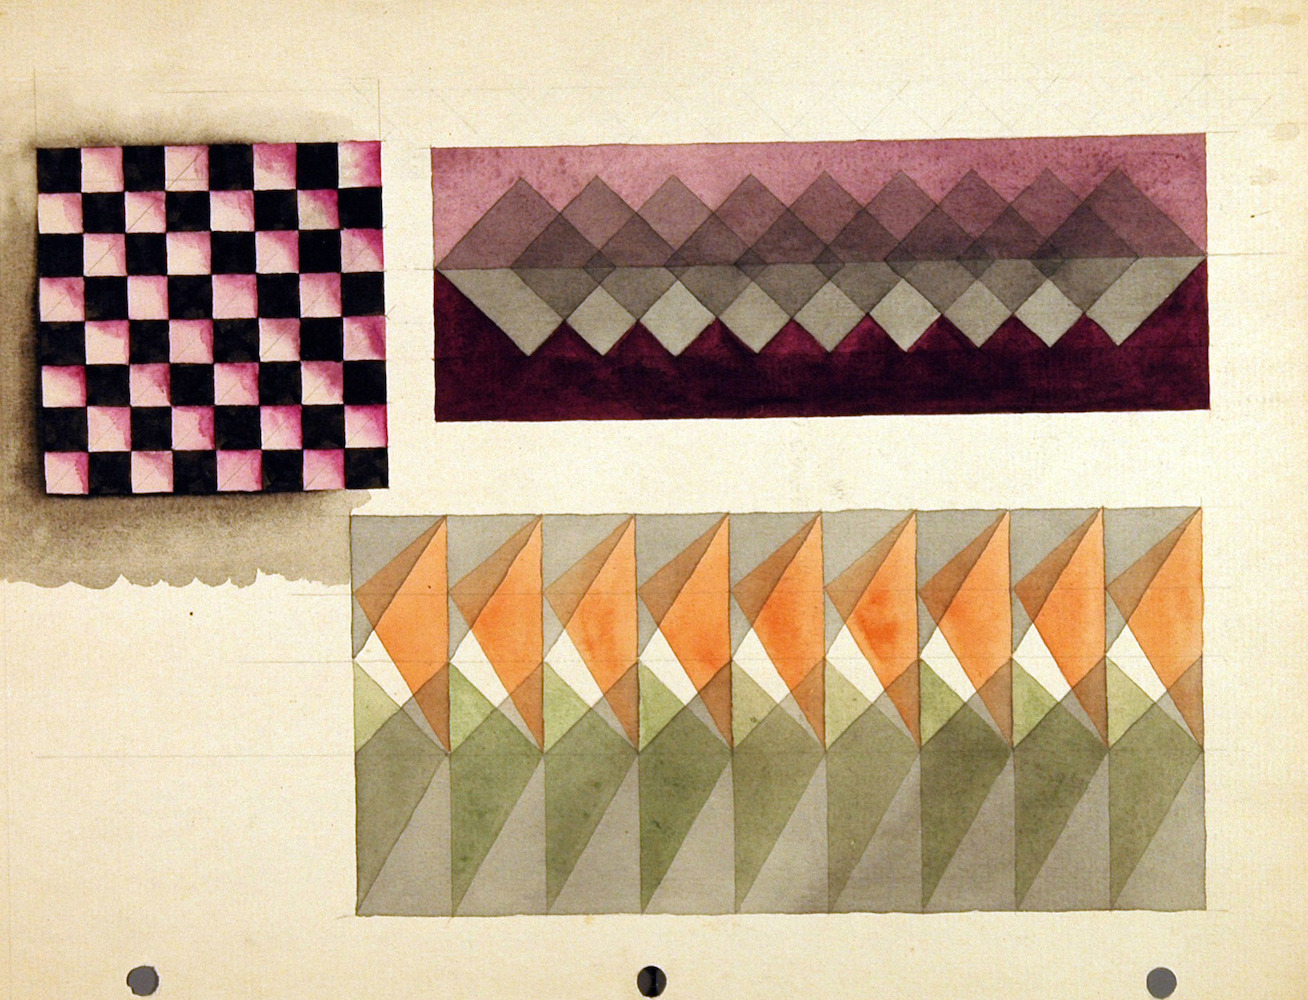 Quadrate, Dreiecke, Rechtecke - Farbexperiment*